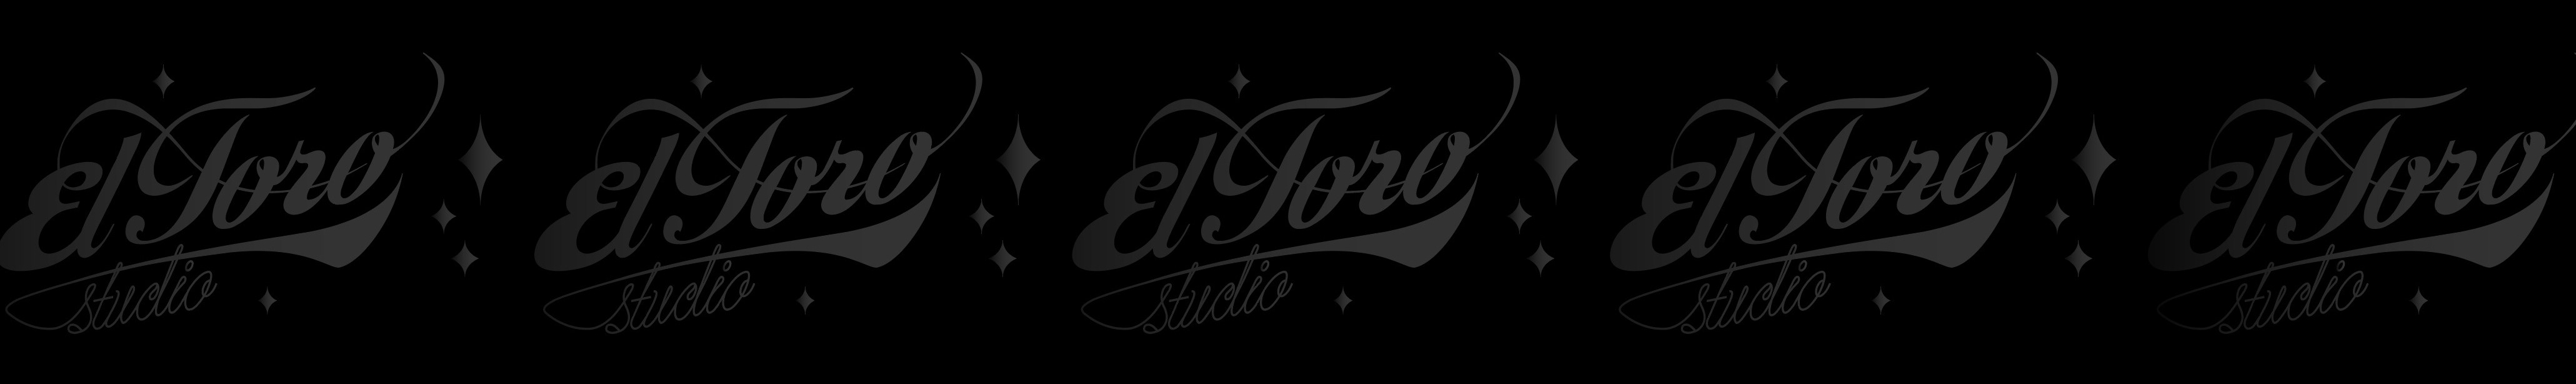 Eltoro Studio's profile banner